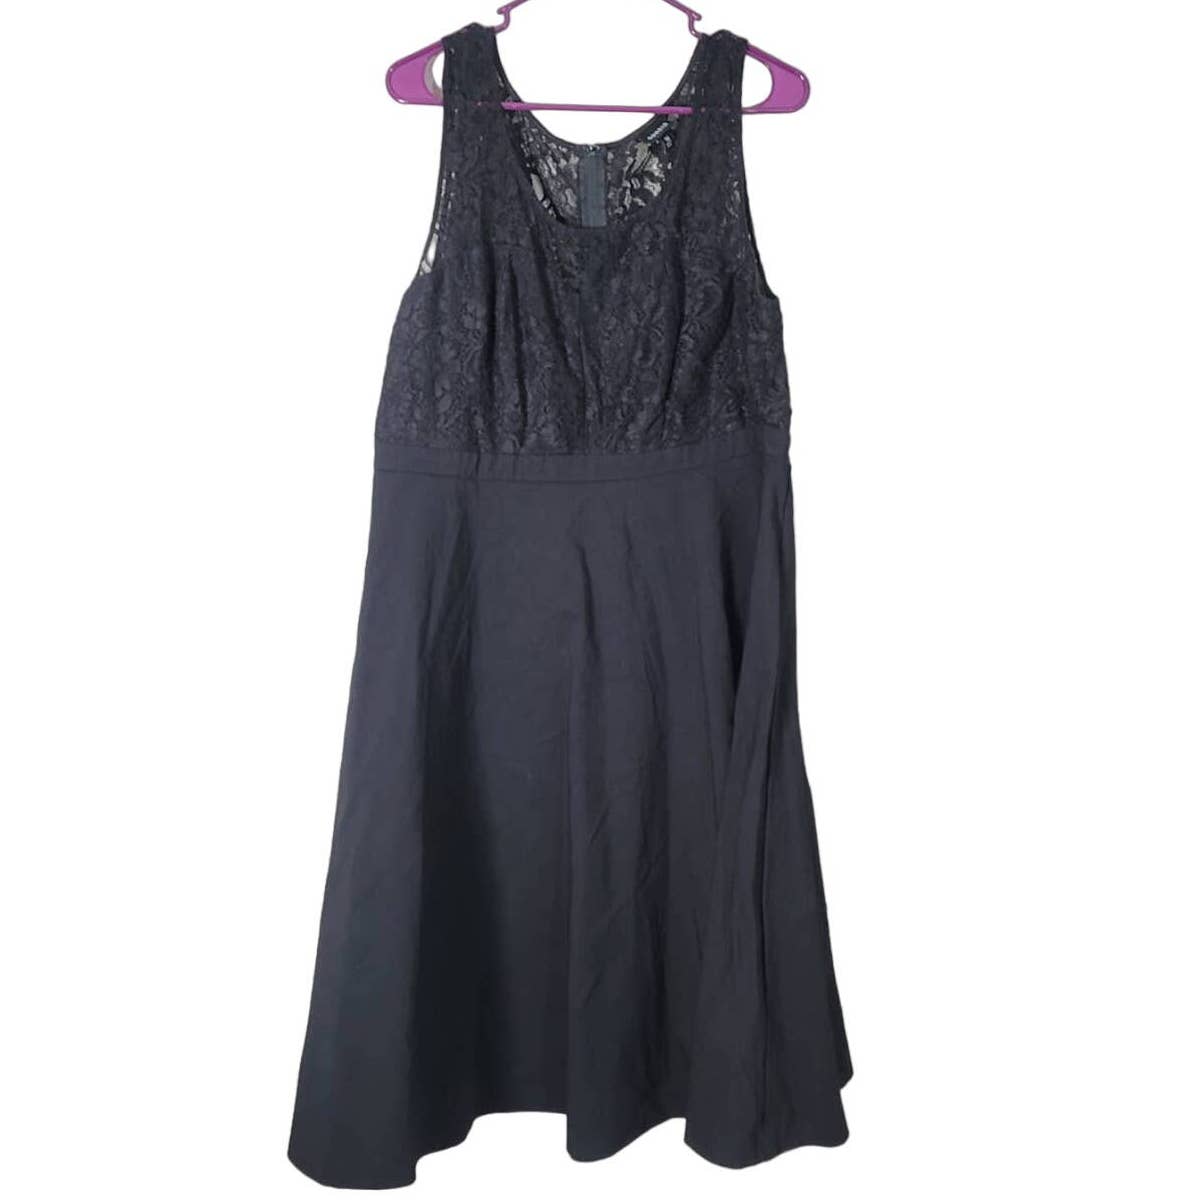 Torrid Midi Dress Black Lace A-Line Back Zip Sleeveless Plus Size 16